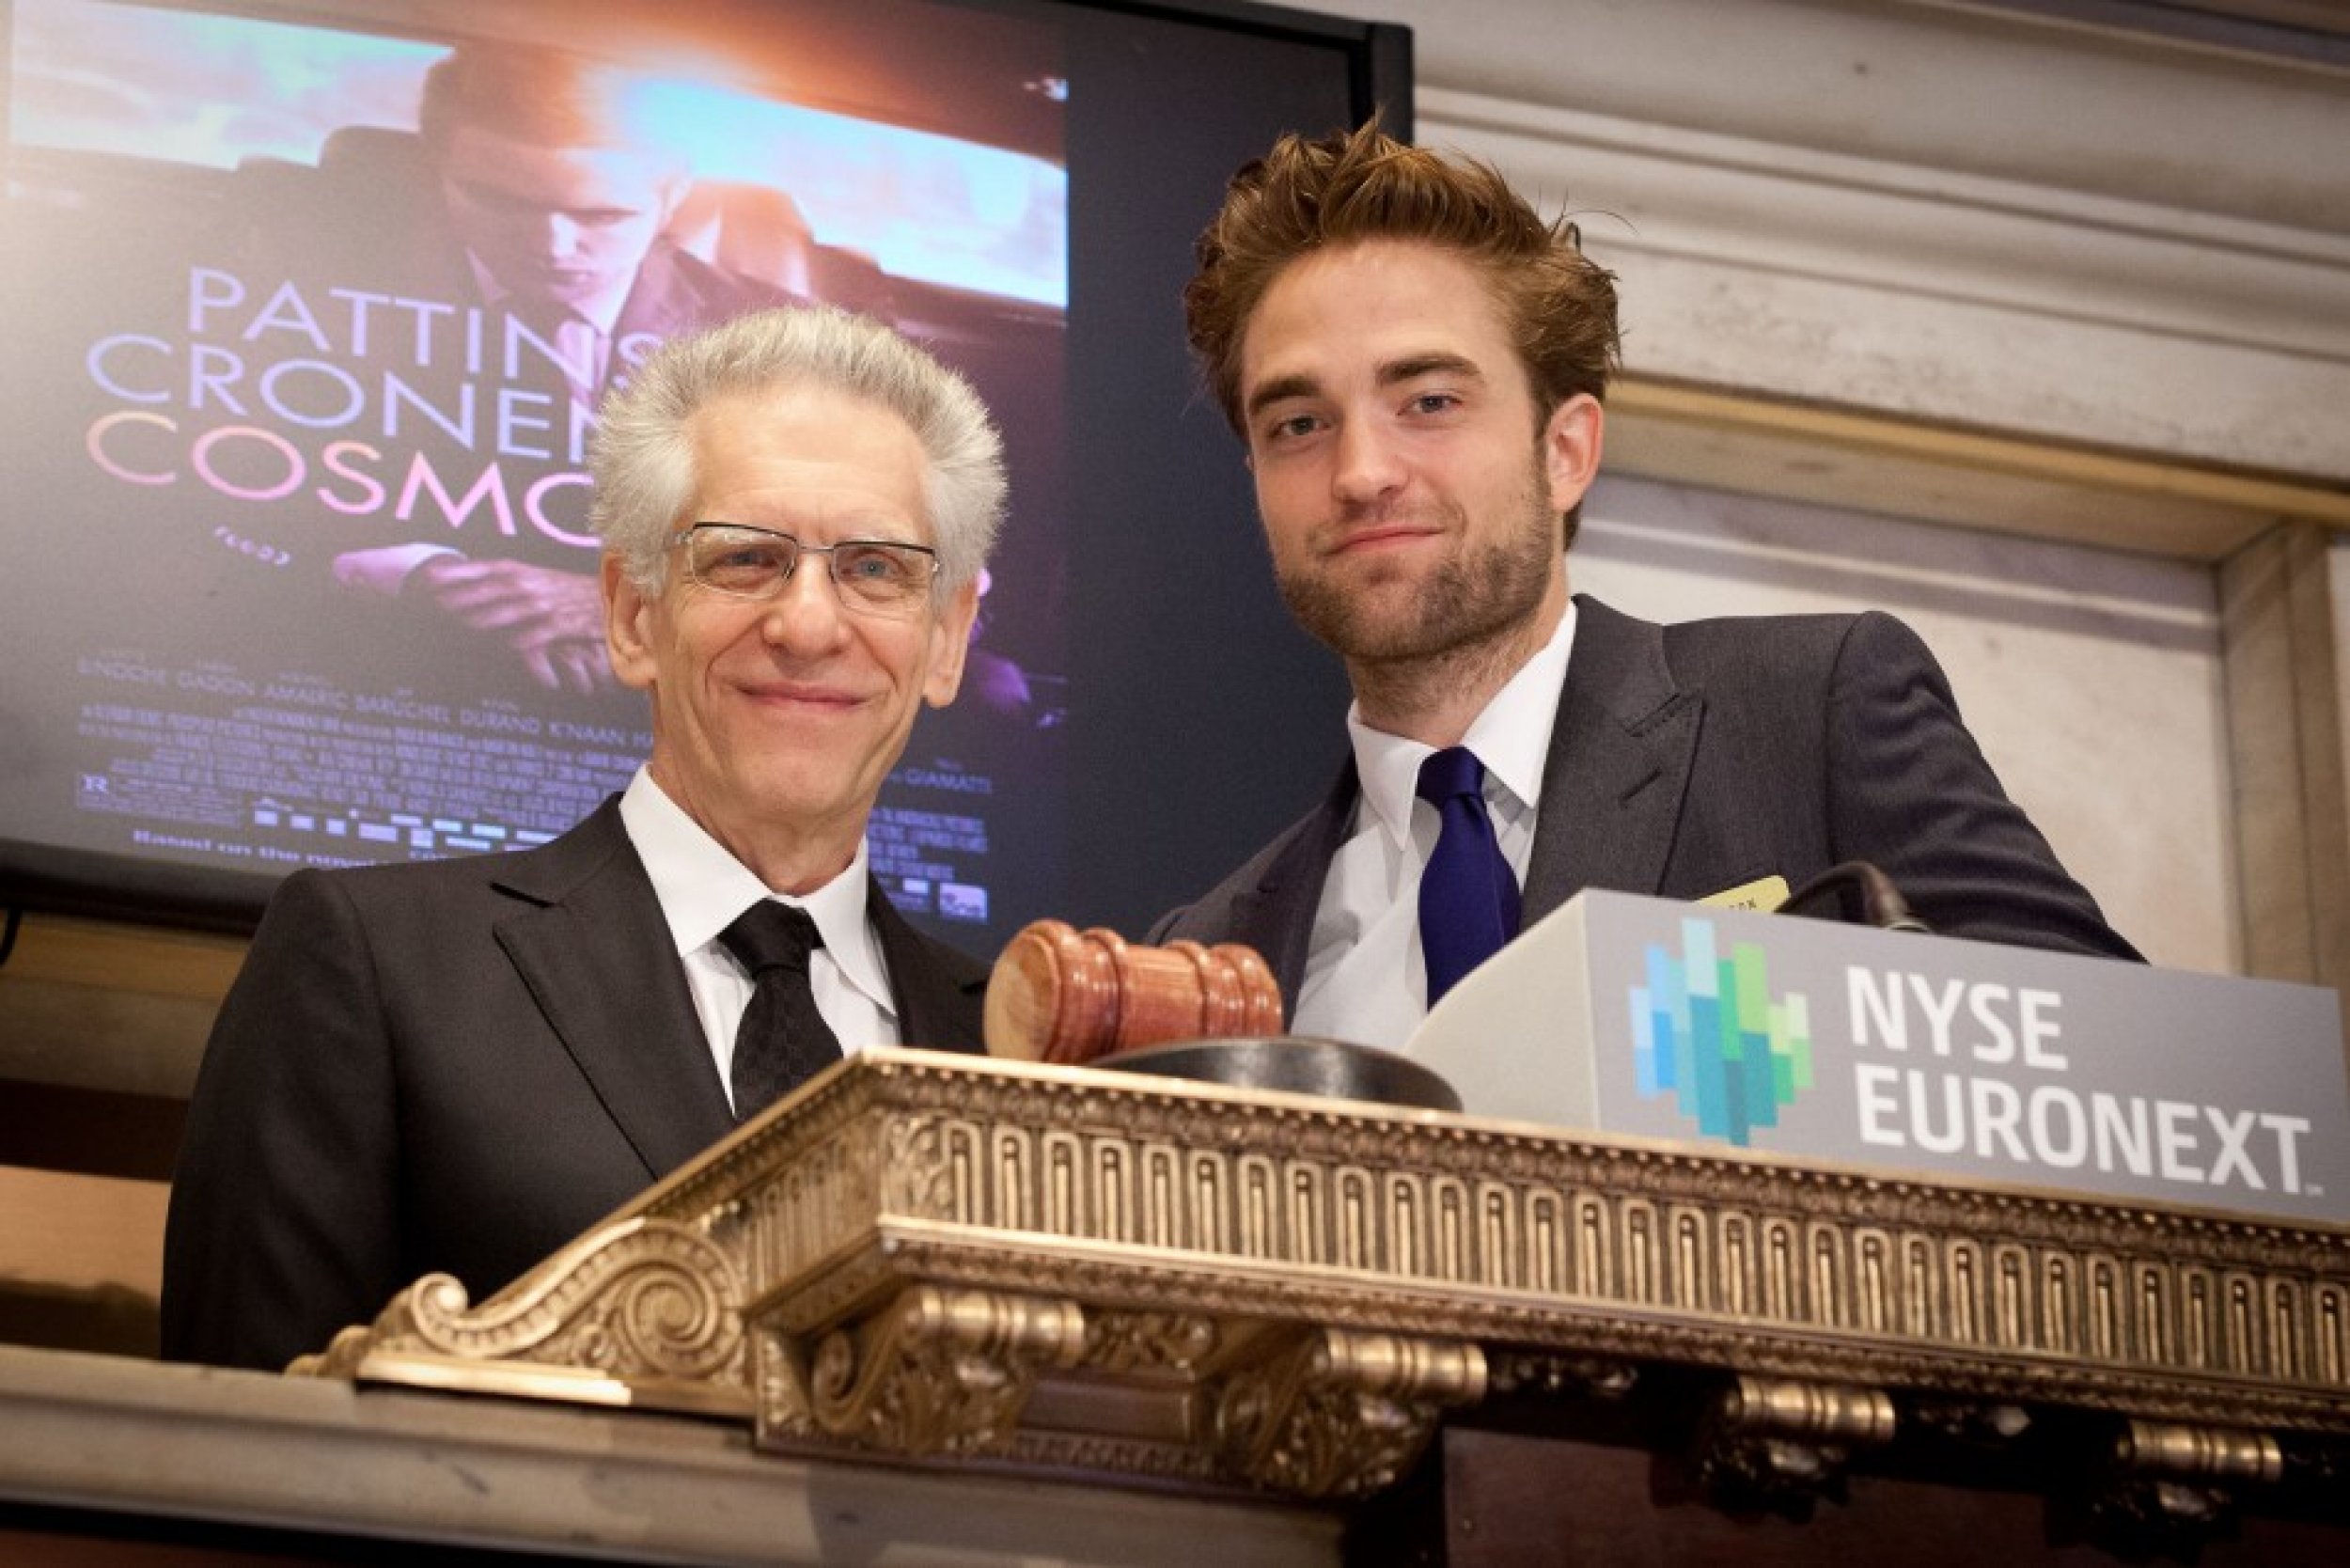 Robert Pattinson and David Cronenberg